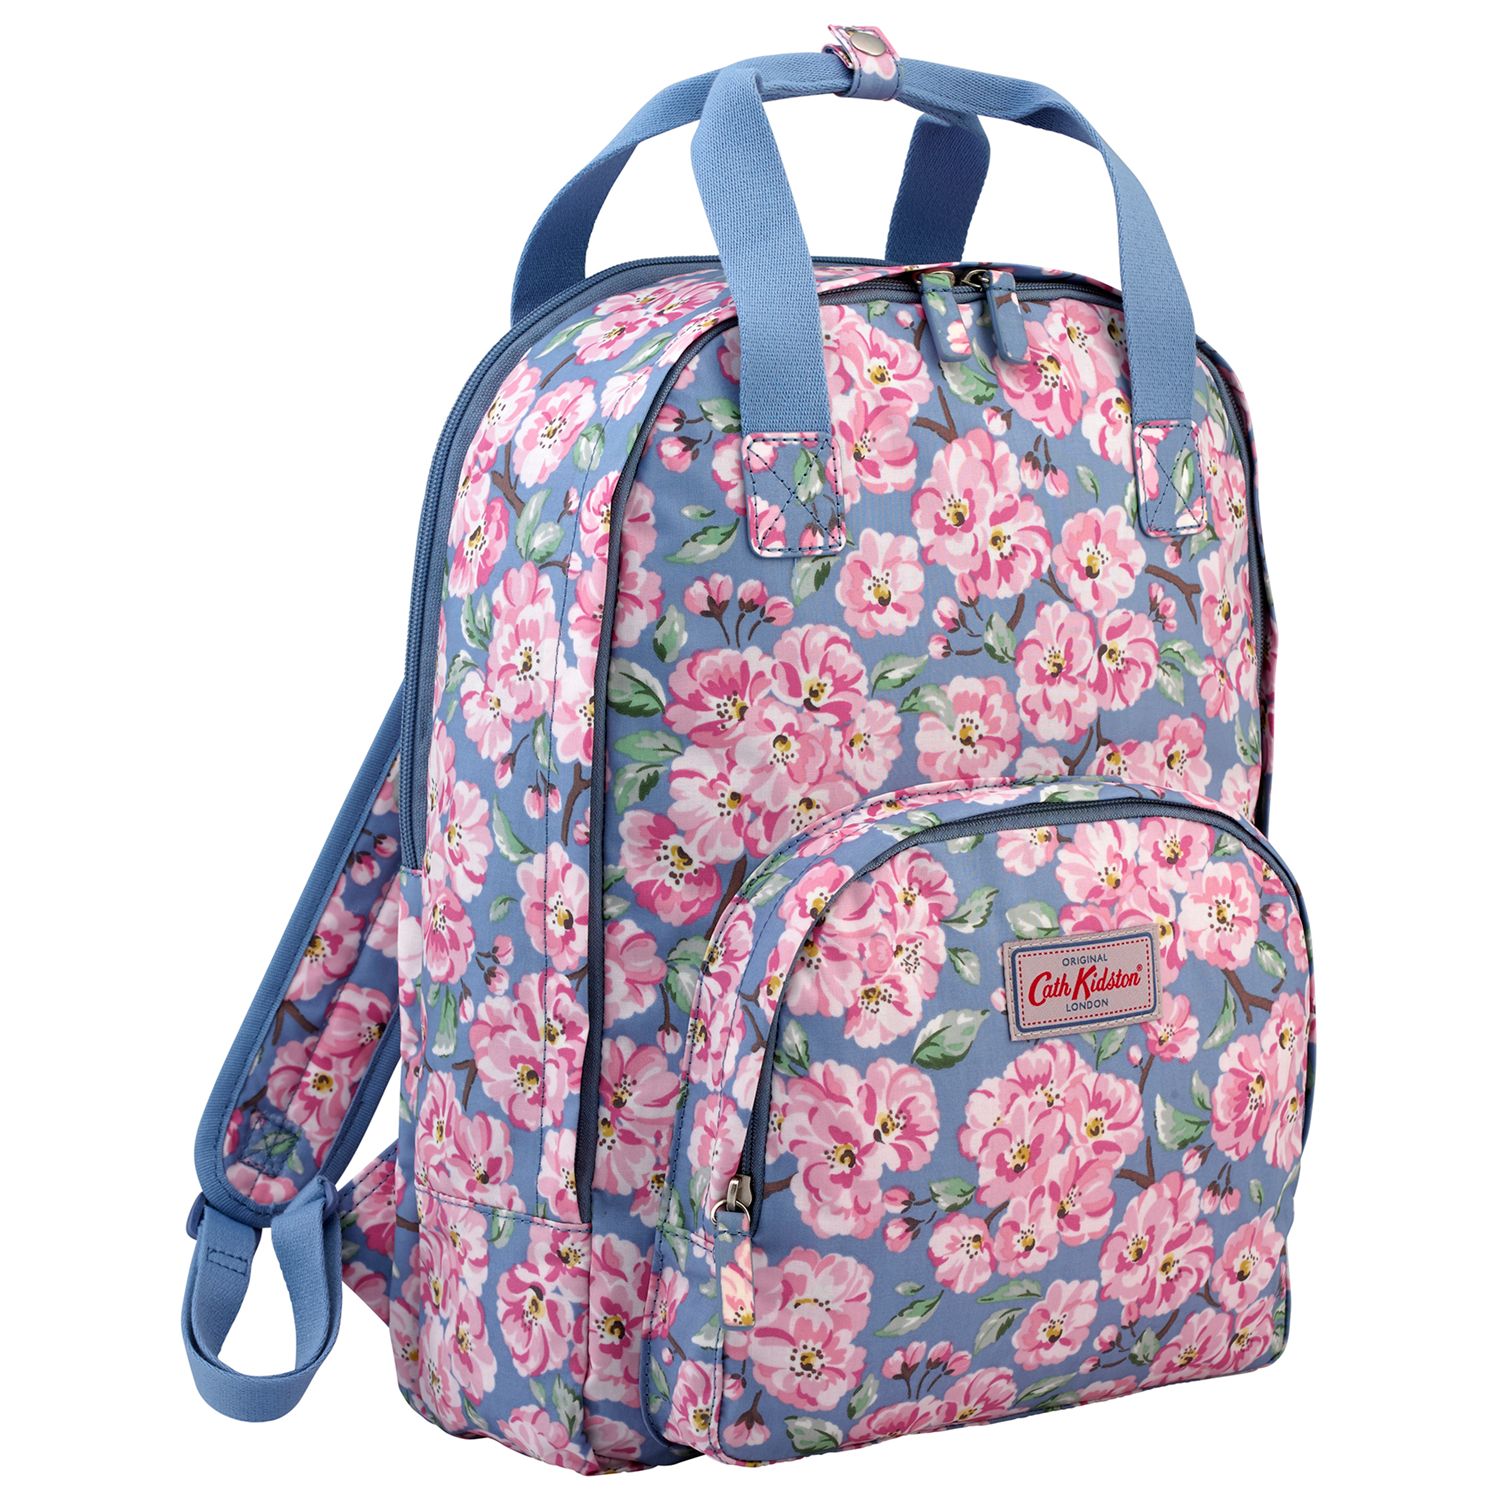 cath kidston backpack laptop